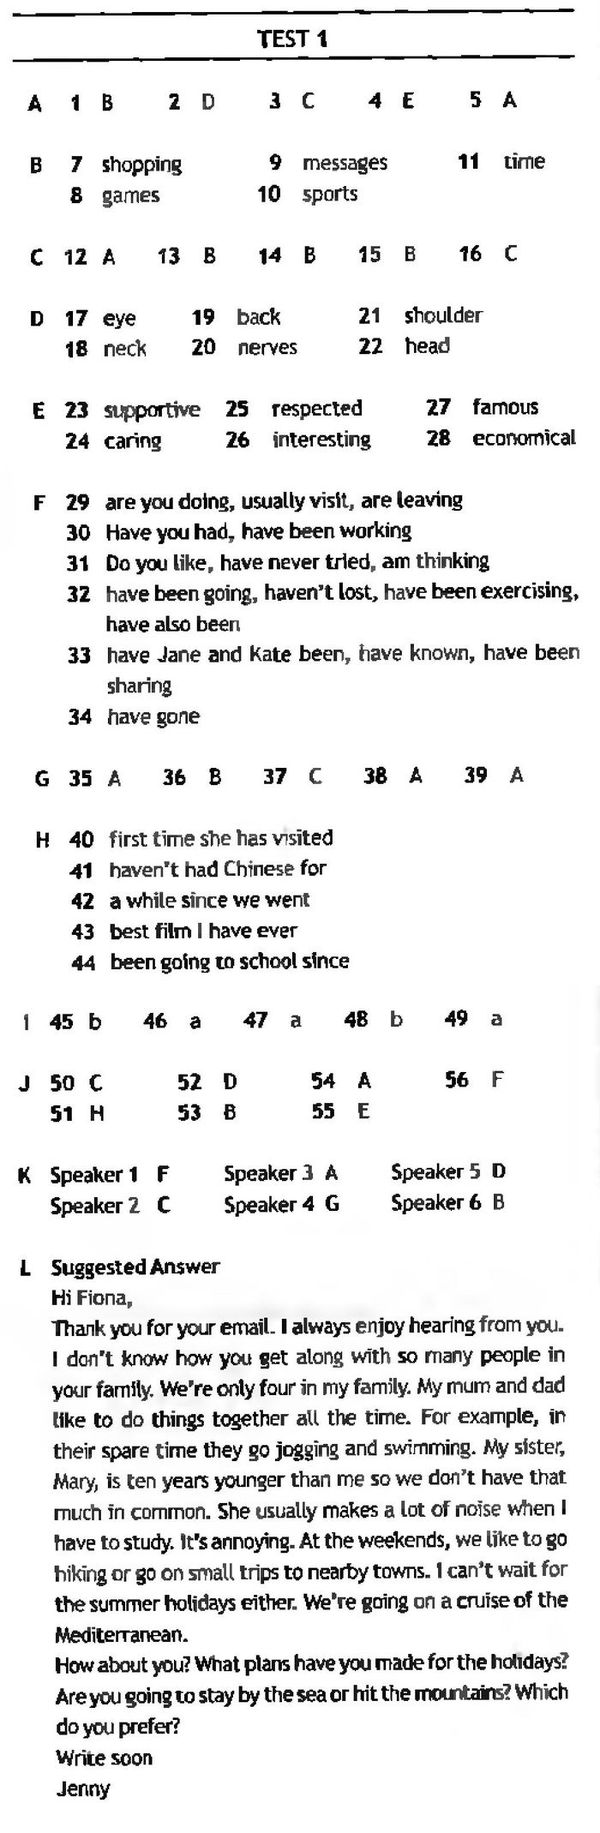 Тест бук 10 класс. Тест буклет 7 класс Старлайт ответы. Test booklet 8 класс Starlight ответы. Тест буклет 10 класс Spotlight ответы. Решебник по английскому языку 10 класс Spotlight.